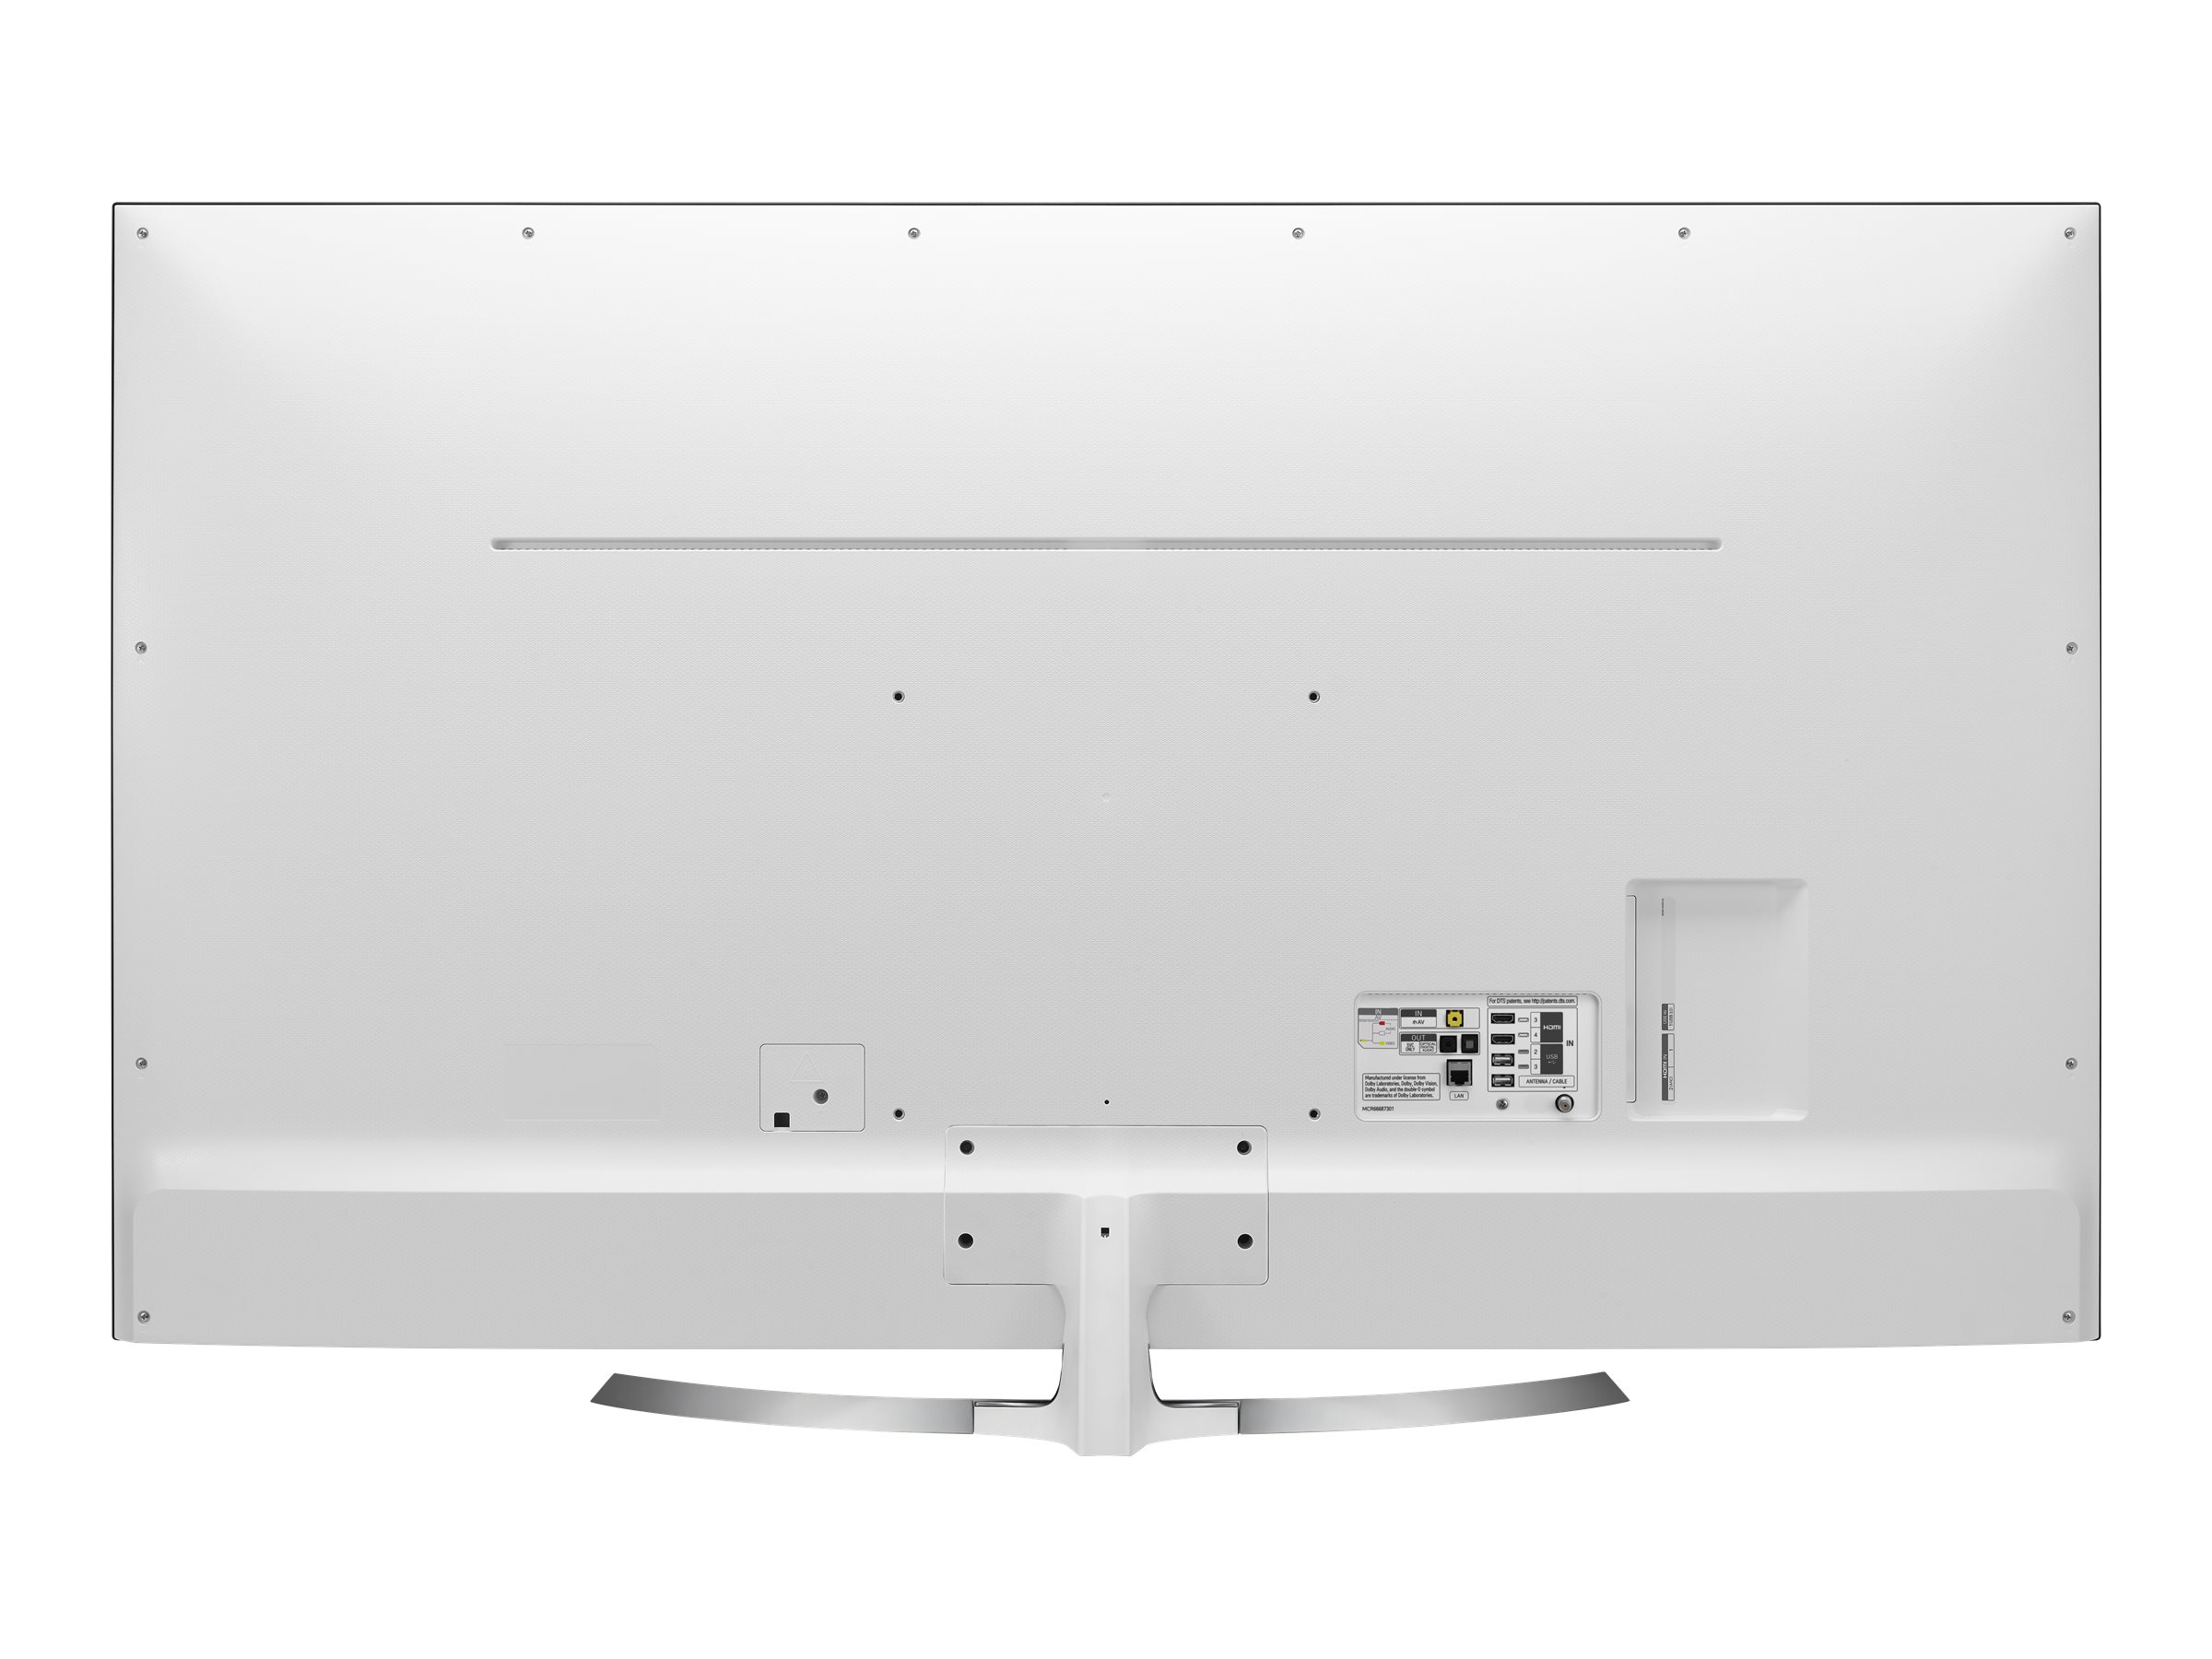 LG 55SJ8500 - 55" Diagonal Class (54.6" viewable) - SJ8500 Series LED-backlit LCD TV - Smart TV - webOS - 4K UHD (2160p) 3840 x 2160 - HDR - Nano Cell Display - image 4 of 10